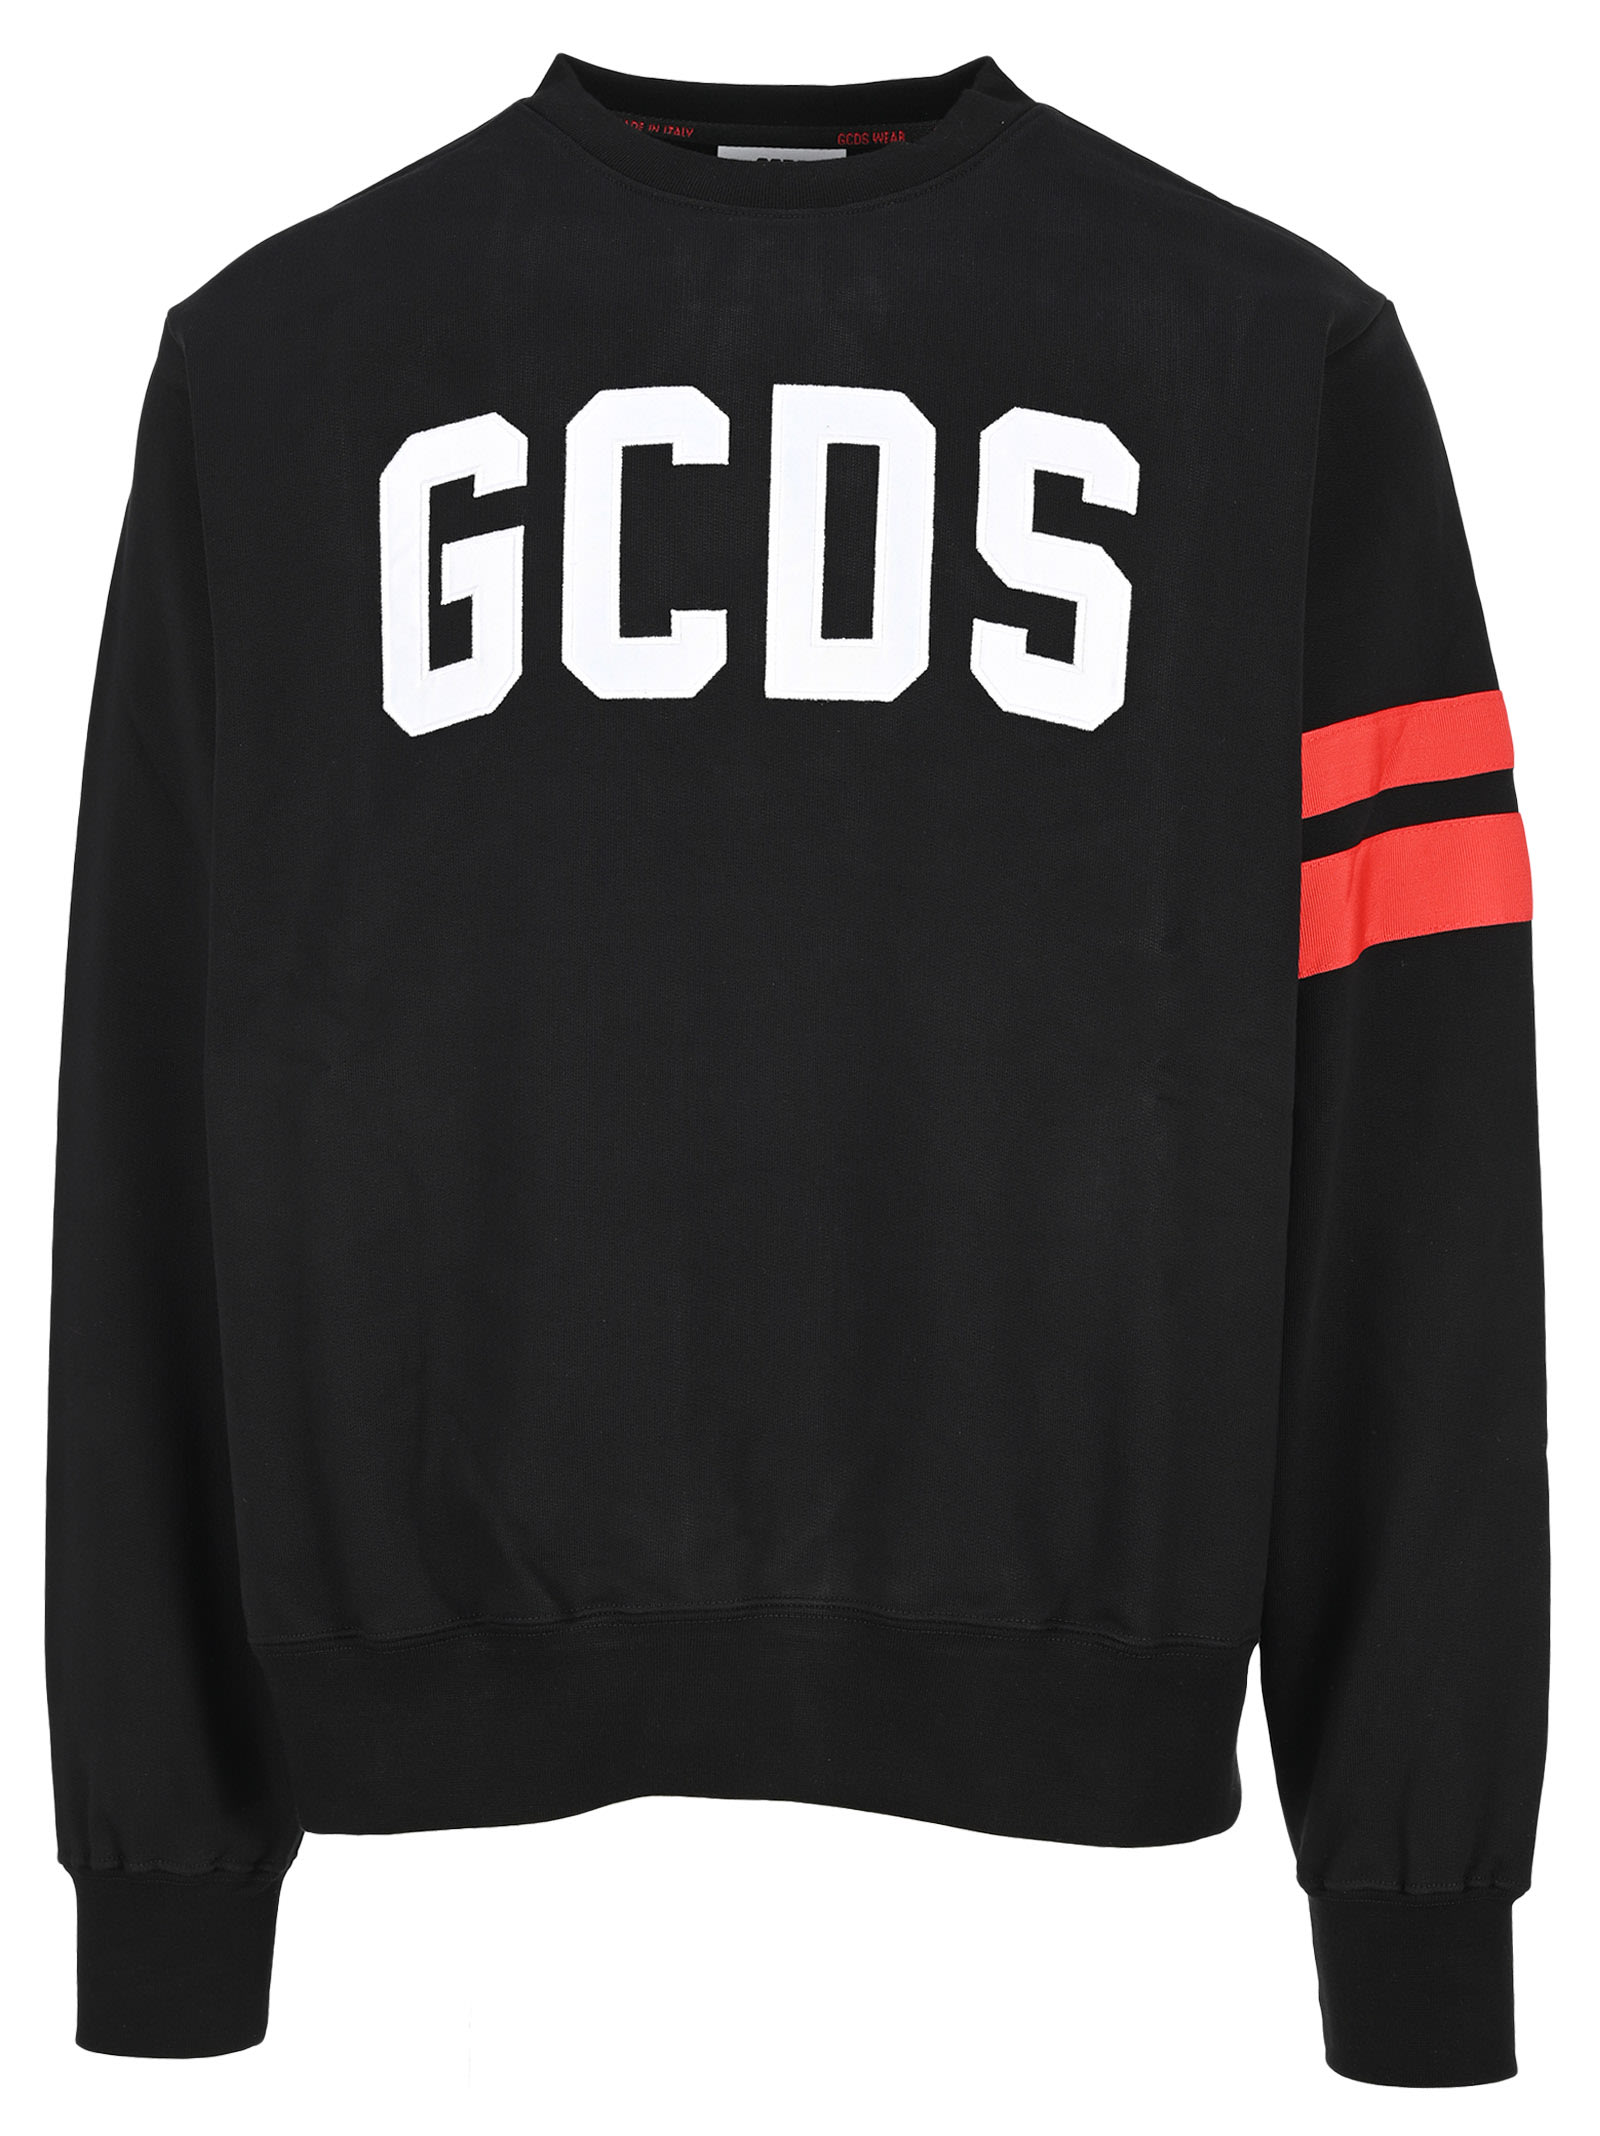 Gcds Clothing Online Sales, UP TO 53% OFF | www.editorialelpirata.com